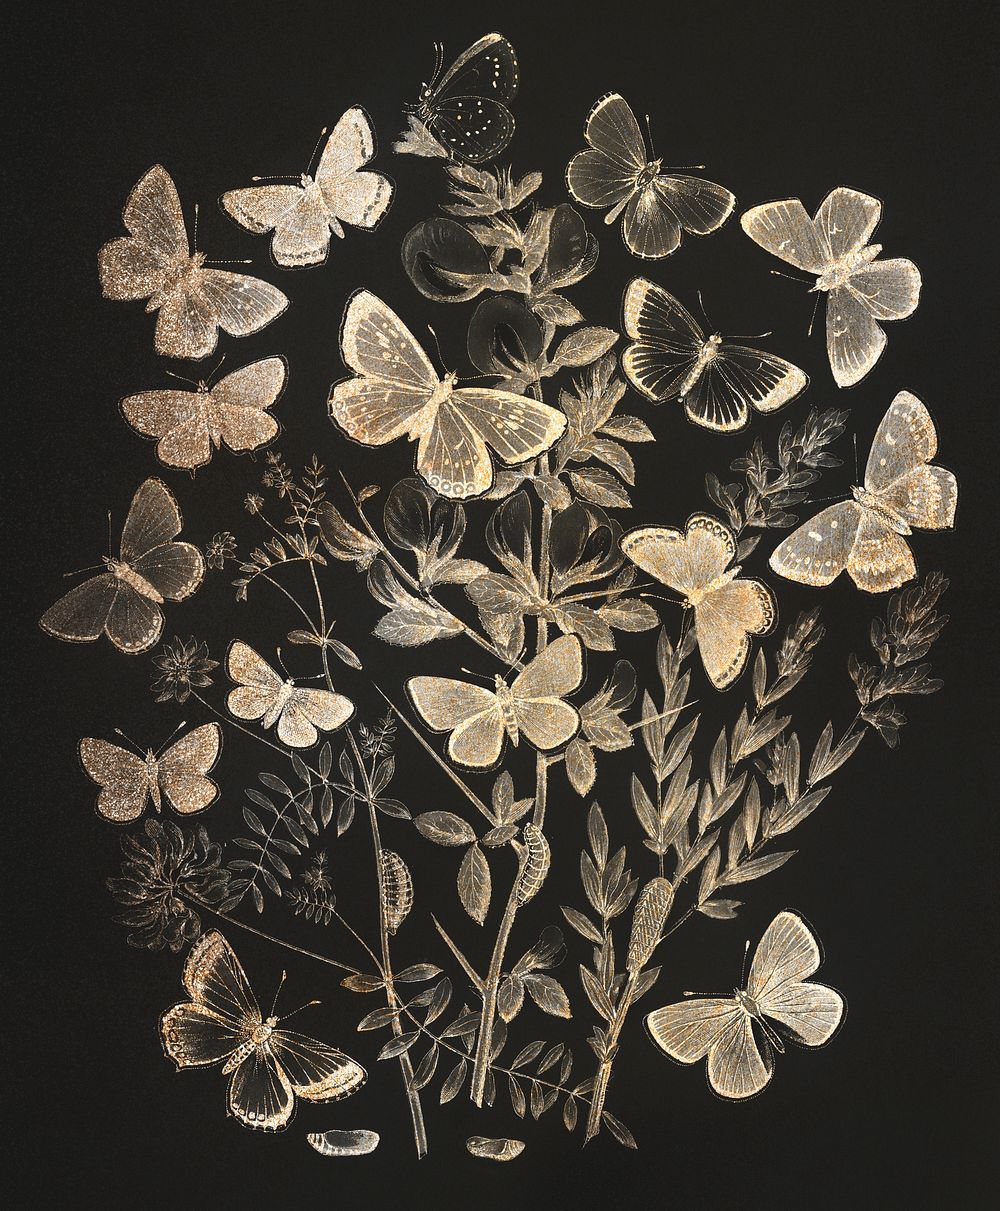 Butterflies and moths fluttering over flowers vintage illustration, remix from original artwork.